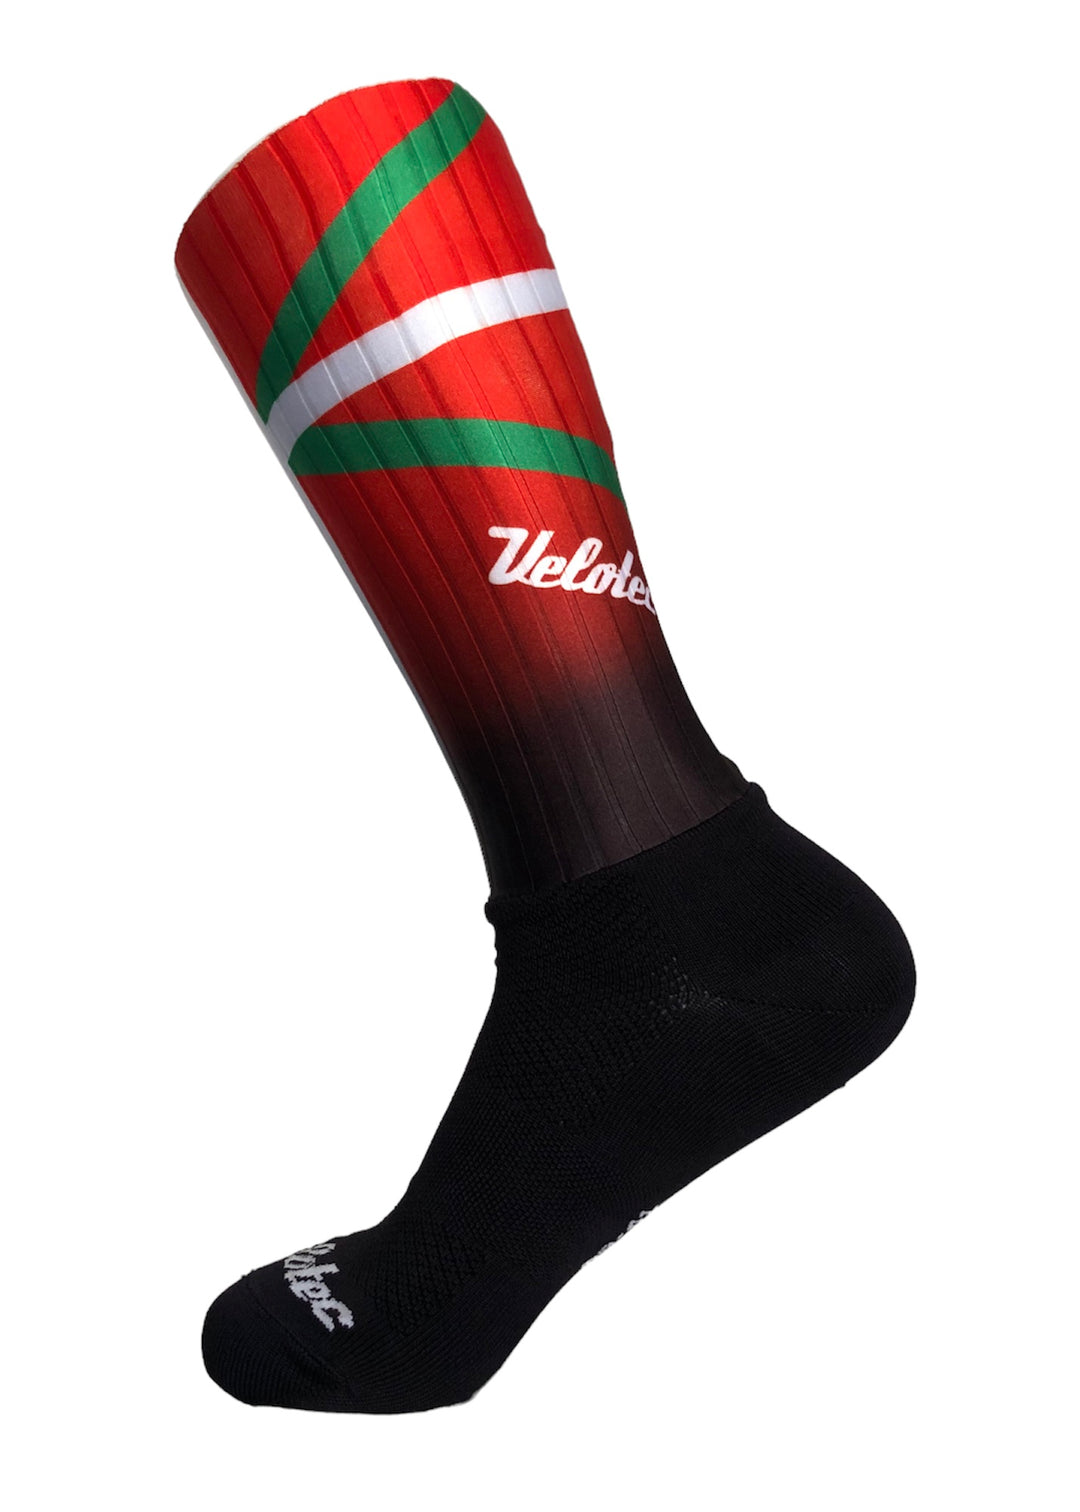 Aero-socks 2.0 Basque